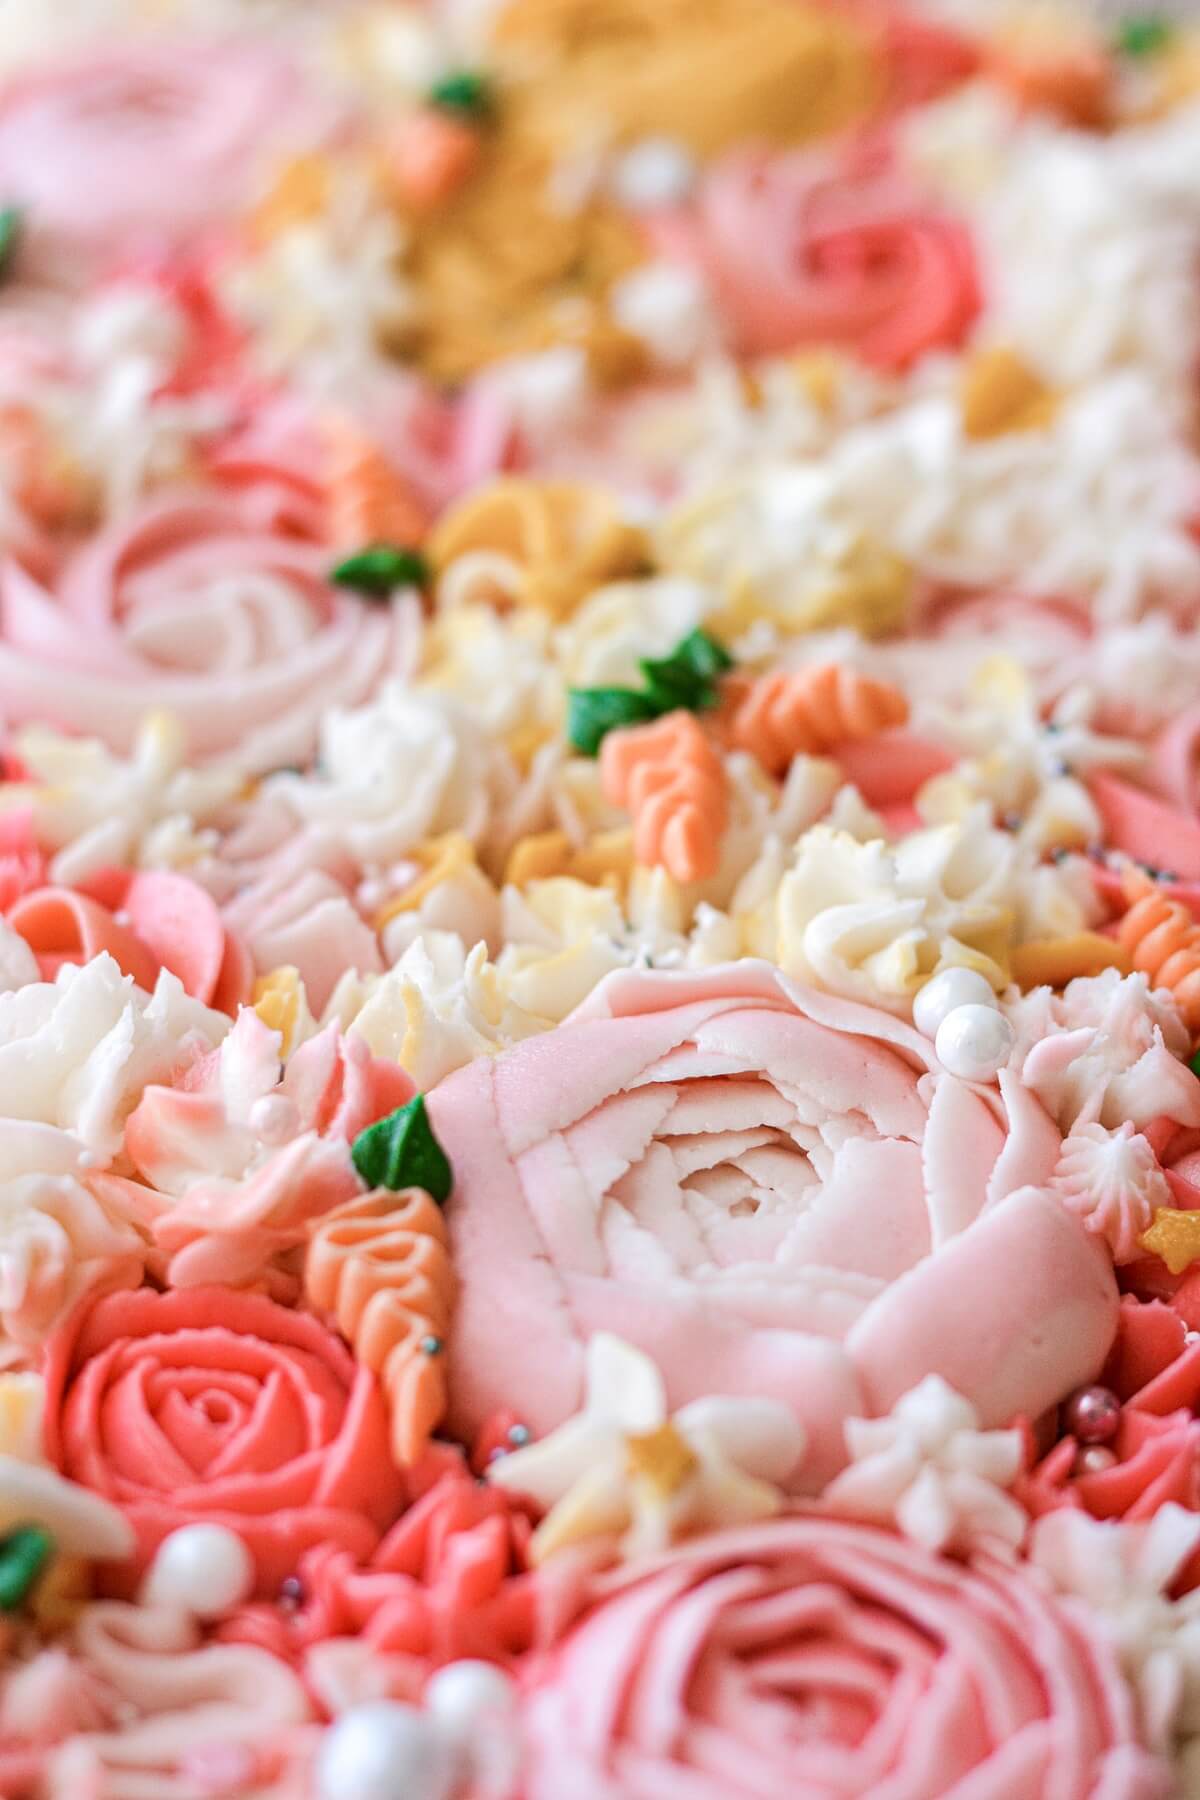 Buttercream flowers on a cake.